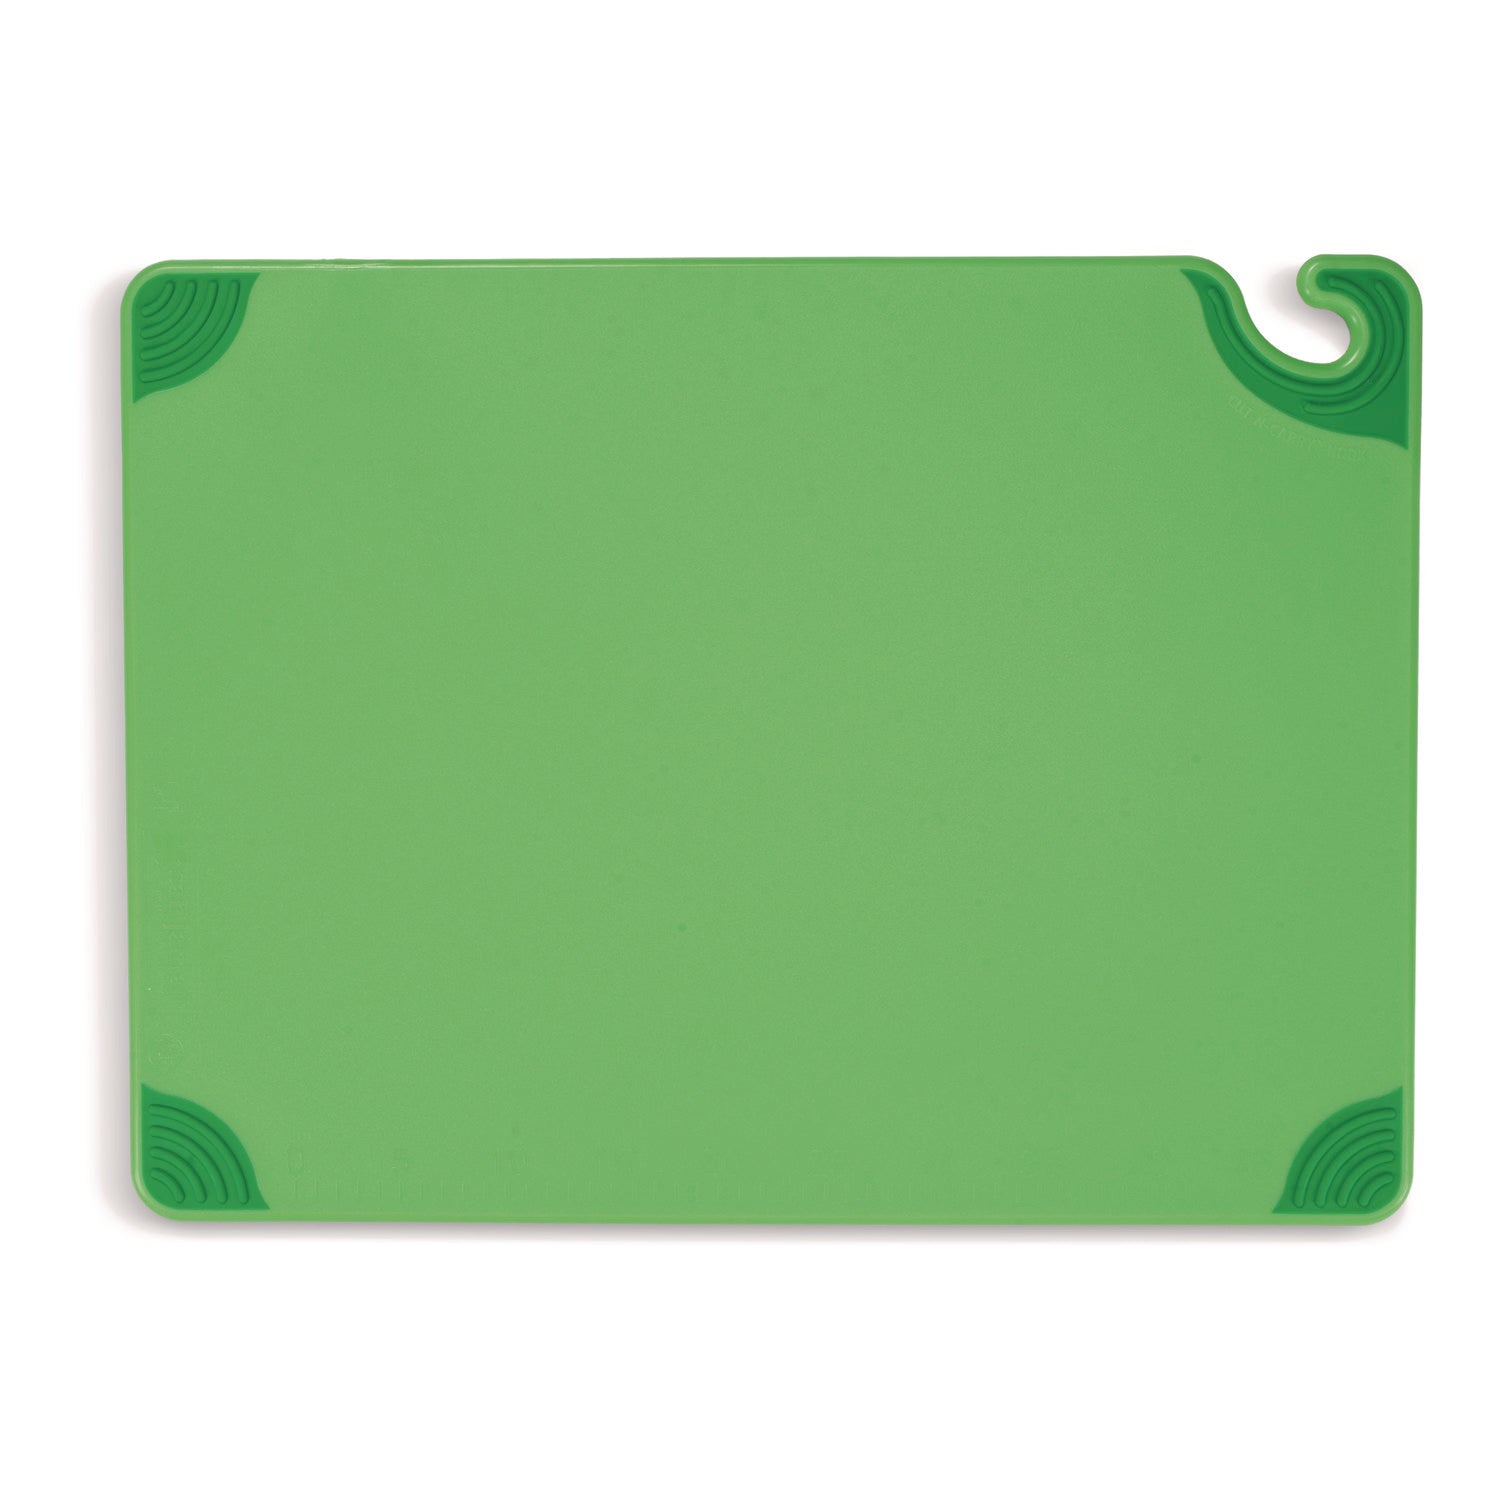 saf-t-grip-cutting-board-24-x-18-x-05-green_sjmcbg182412gn - 1